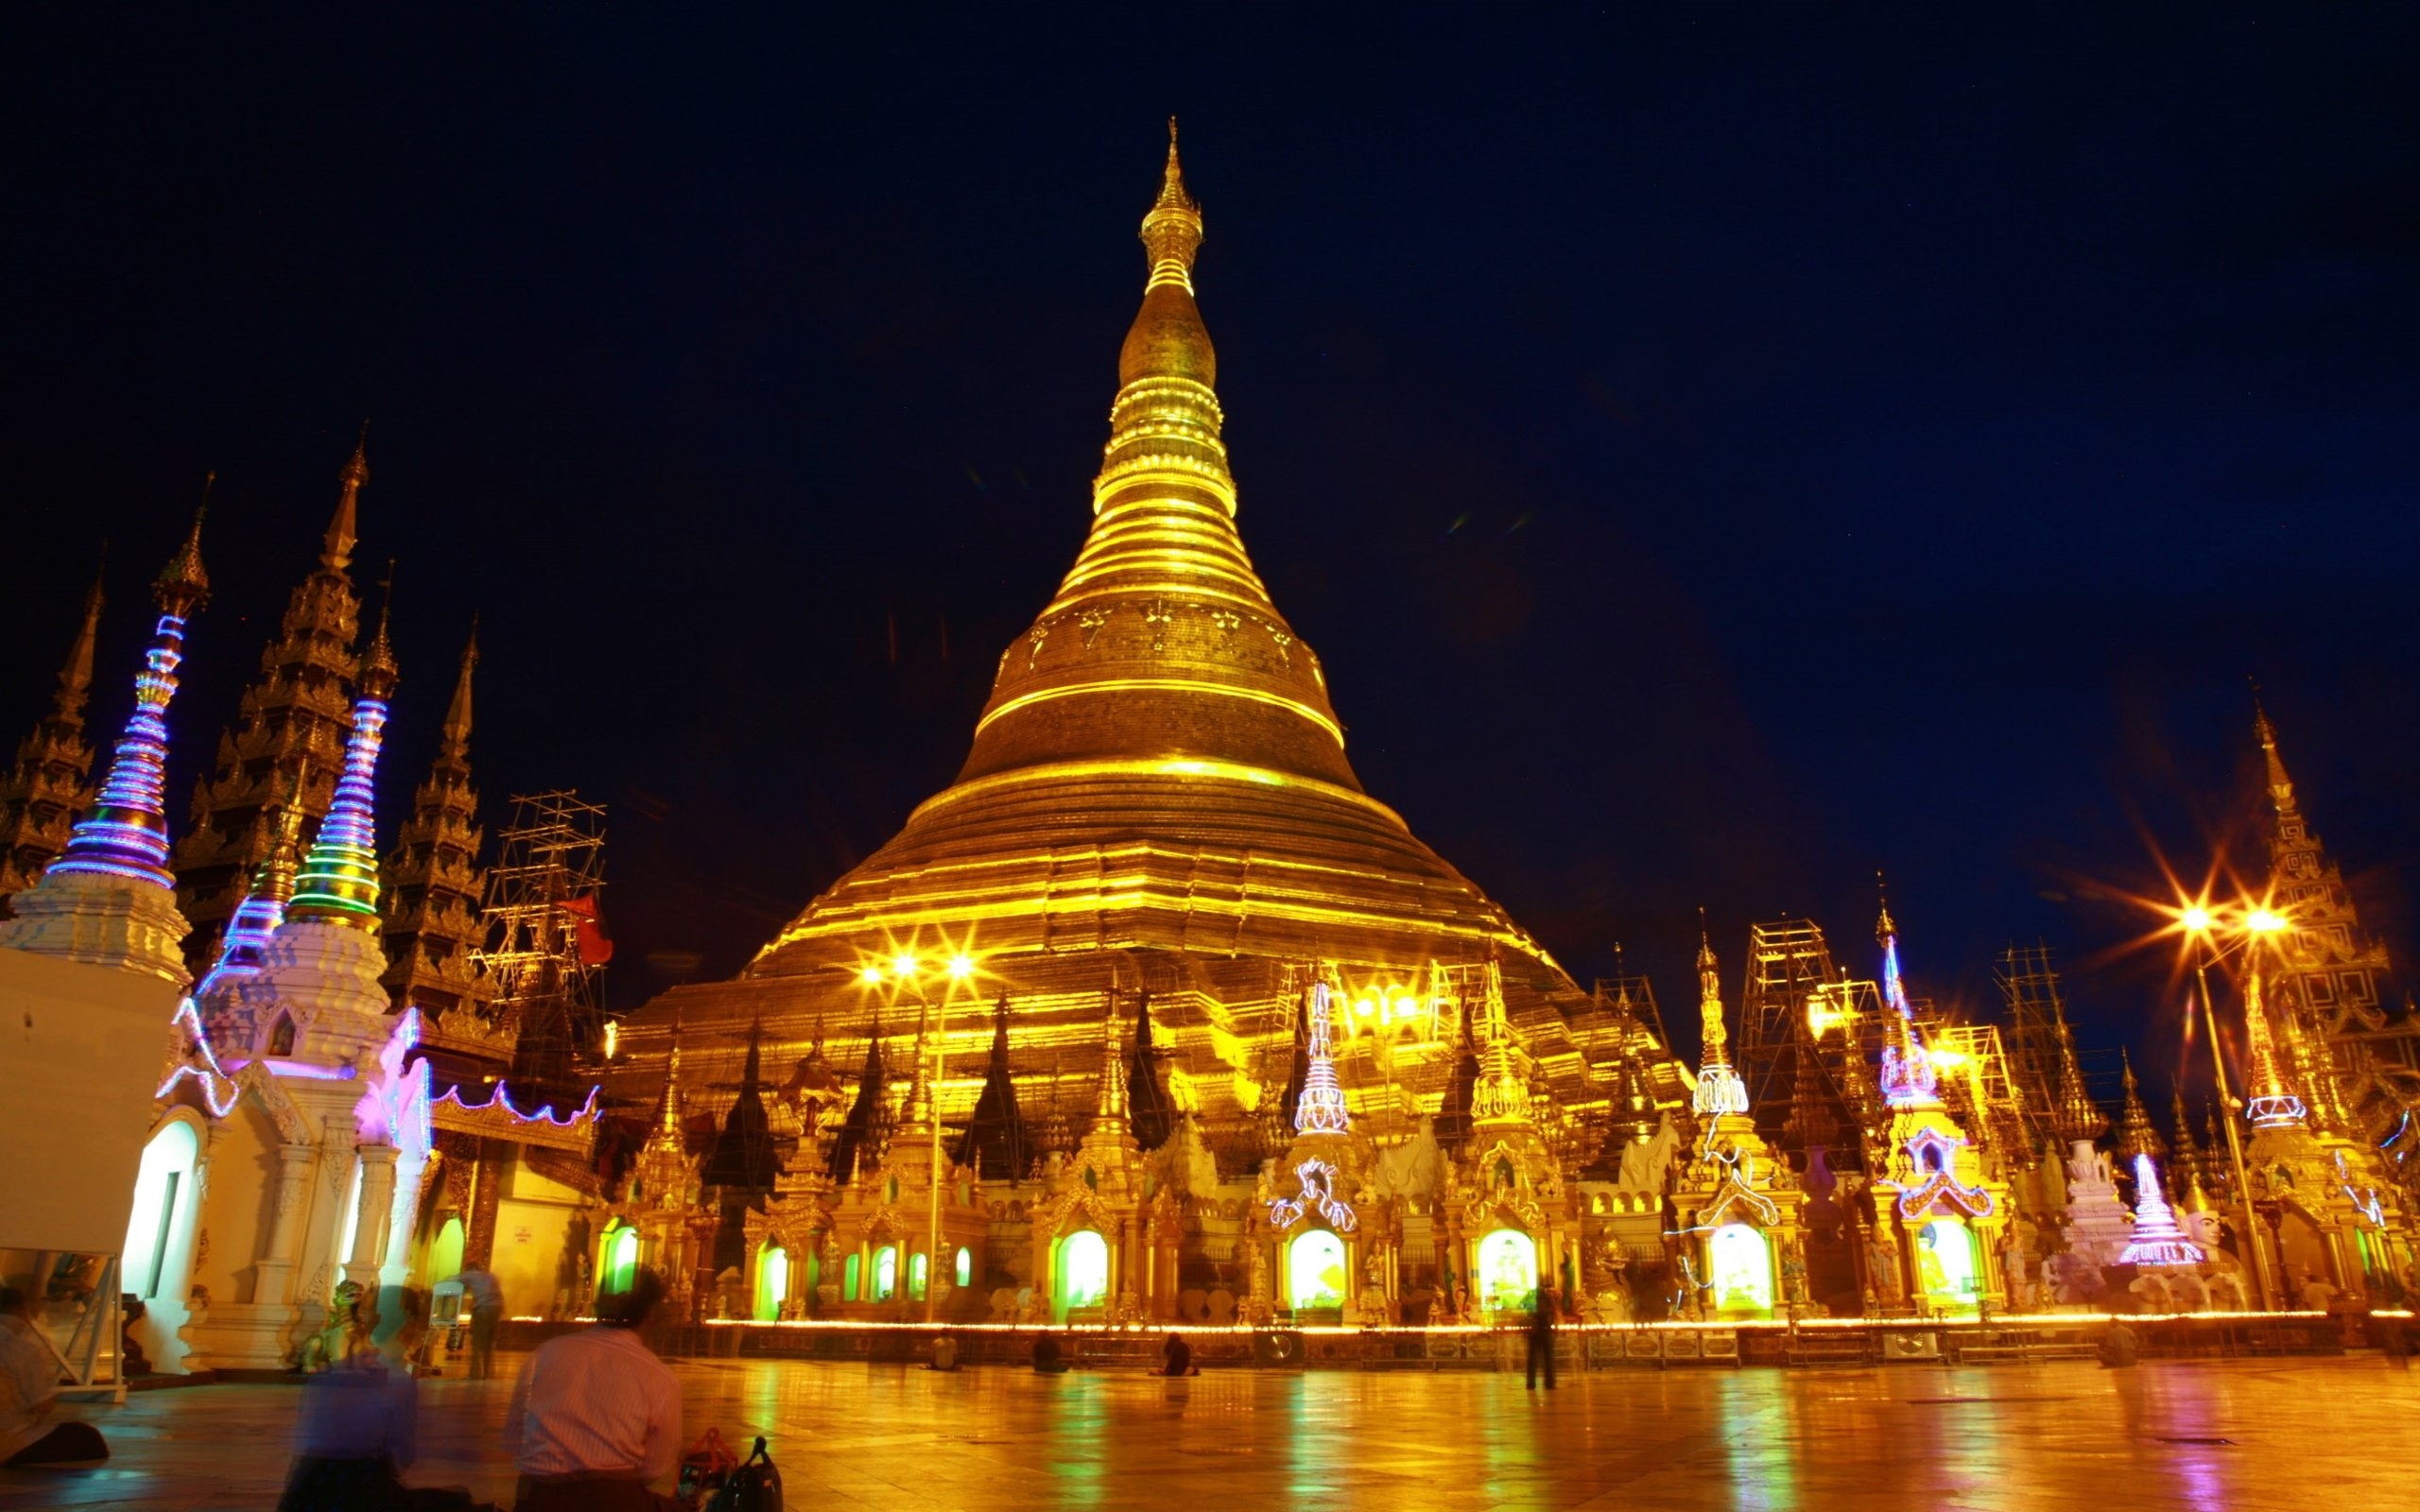 Shwedagon Pagoda, Myanmar desktop HD wallpaper, Tranquil atmosphere, Ornate architecture, 2560x1600 HD Desktop